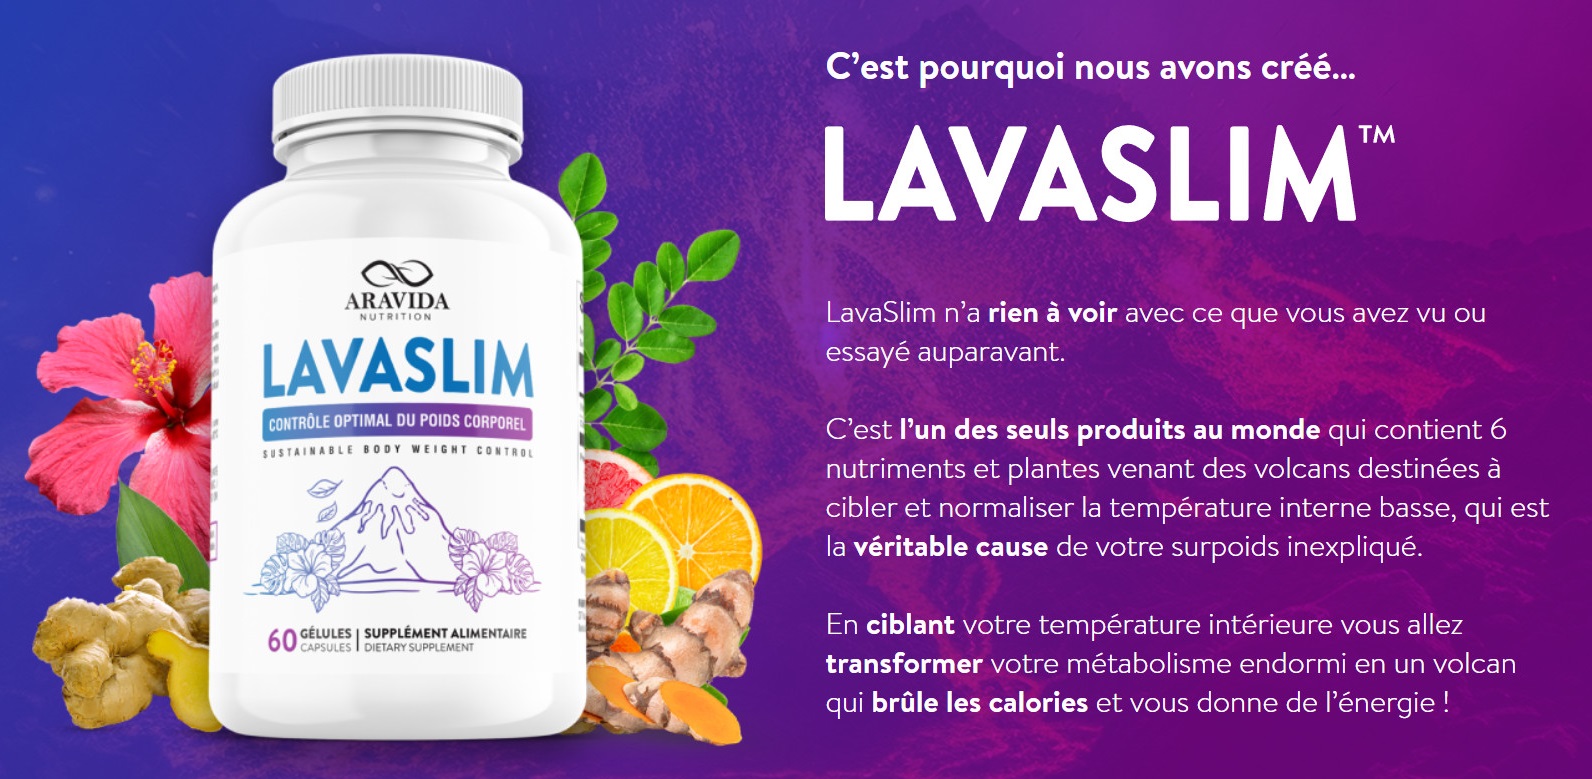 LavaSlim France